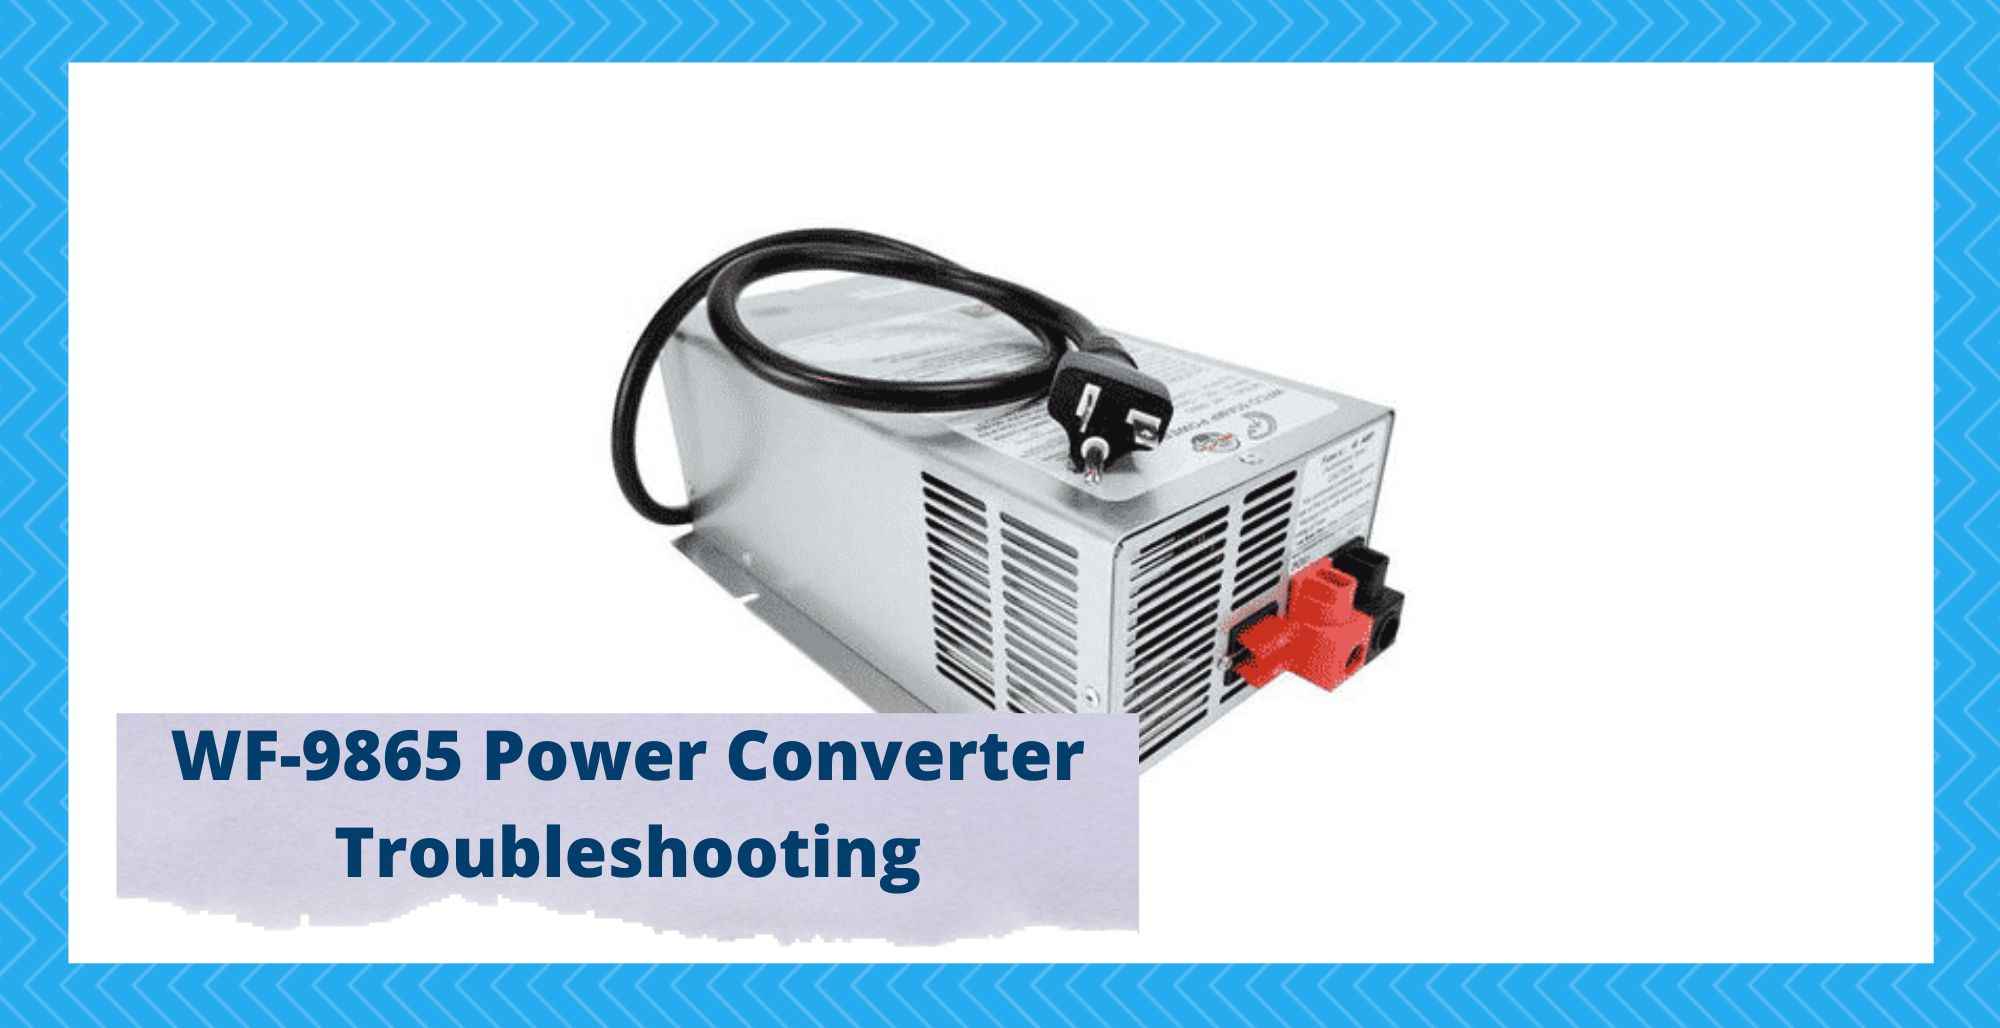 wf-9865 power converter troubleshooting